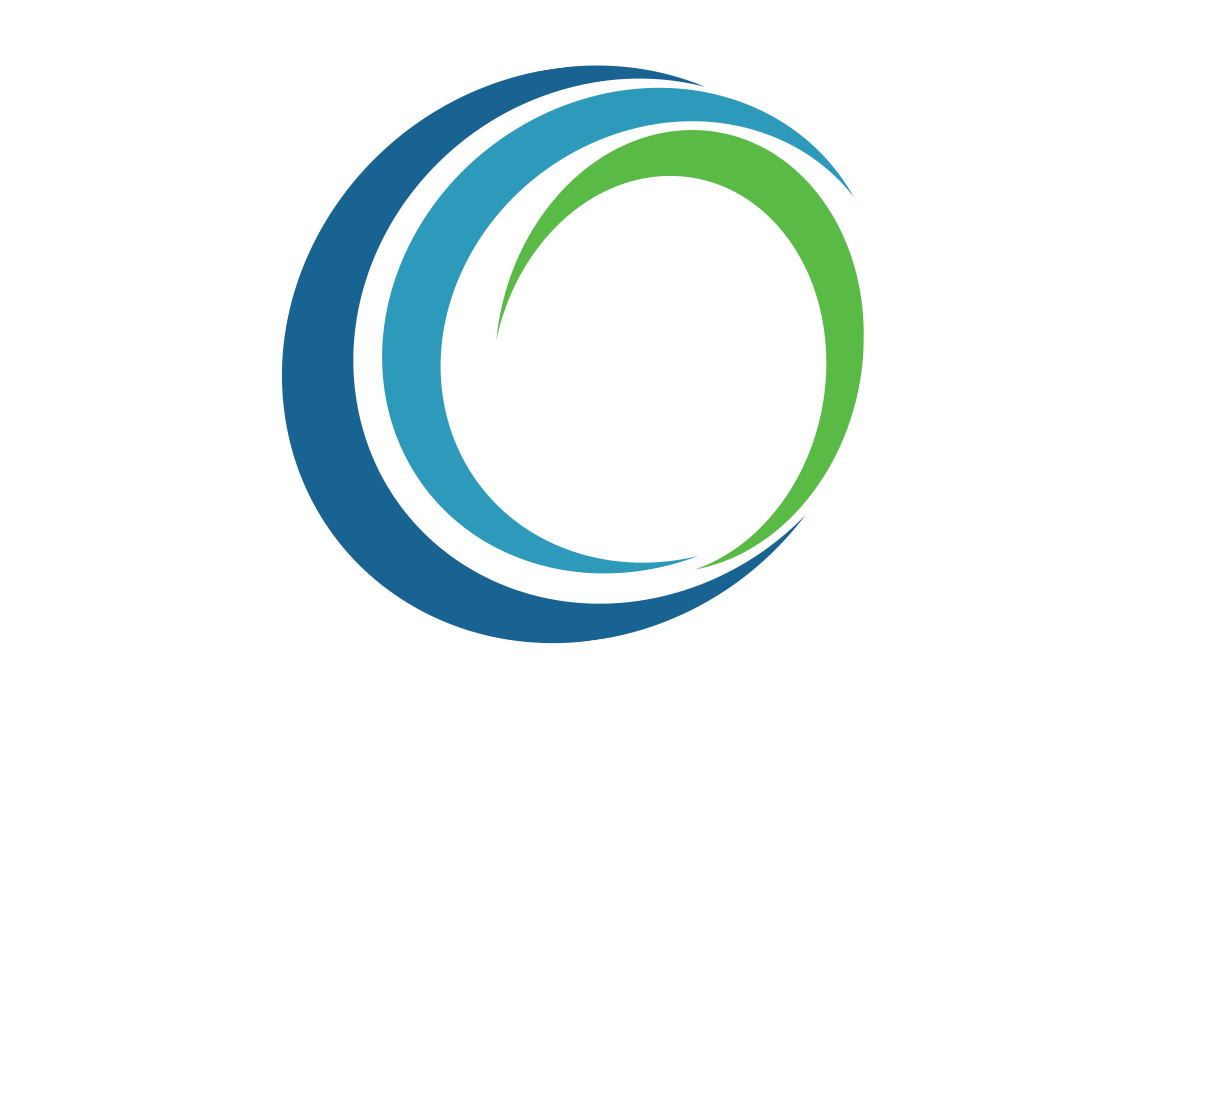 chilliwack chamber of commerce